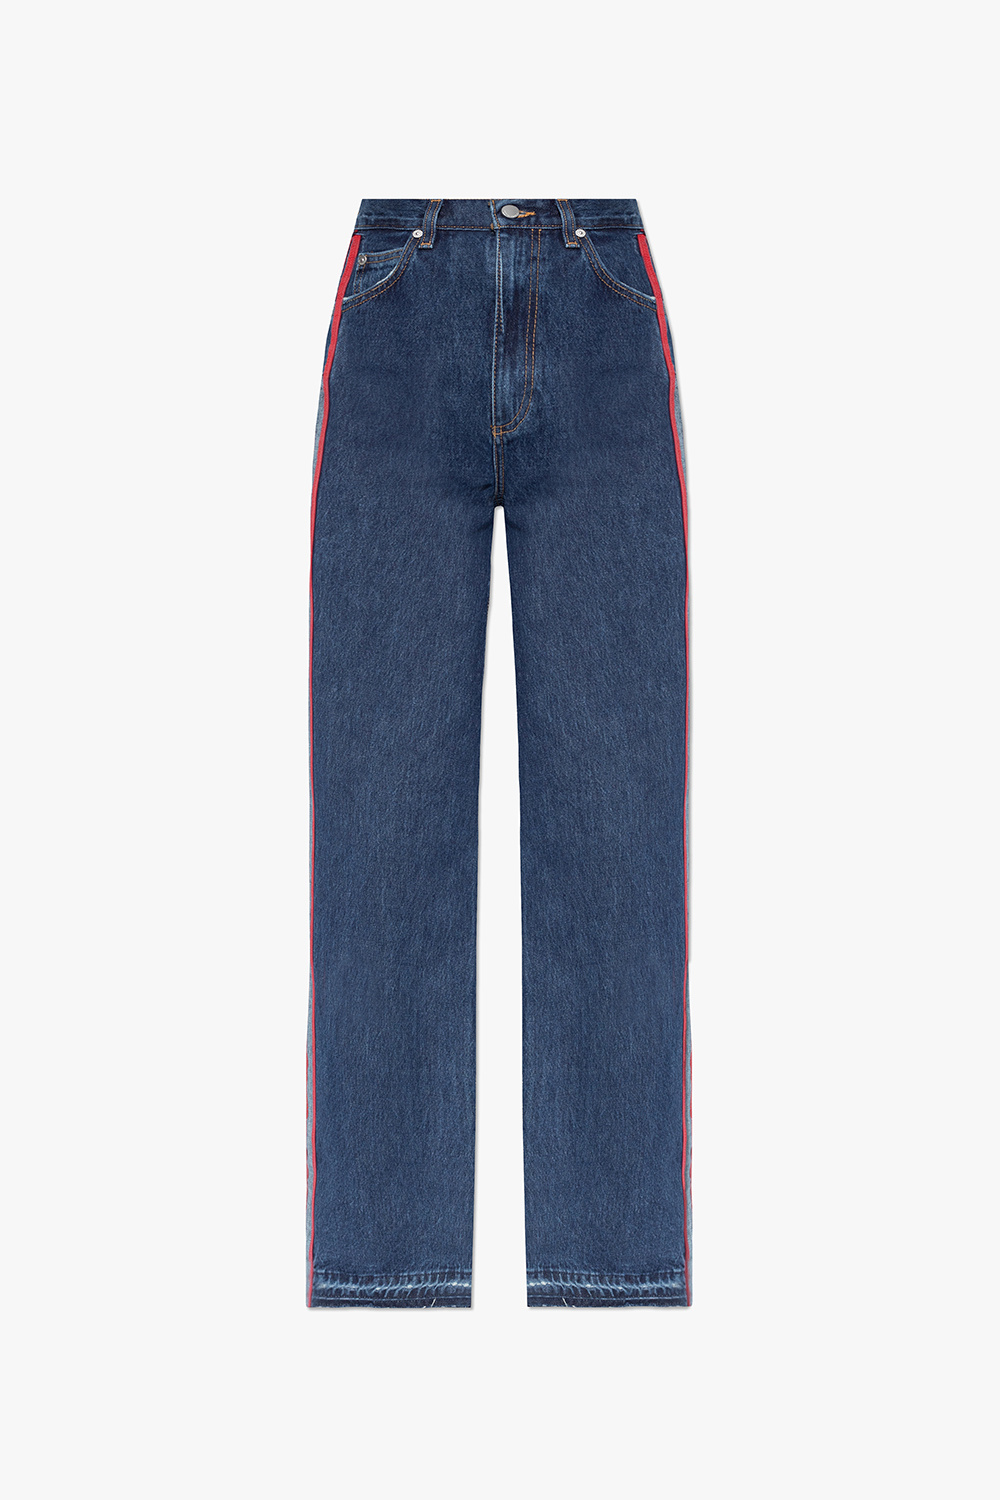 Red Valentino Side-stripe jeans